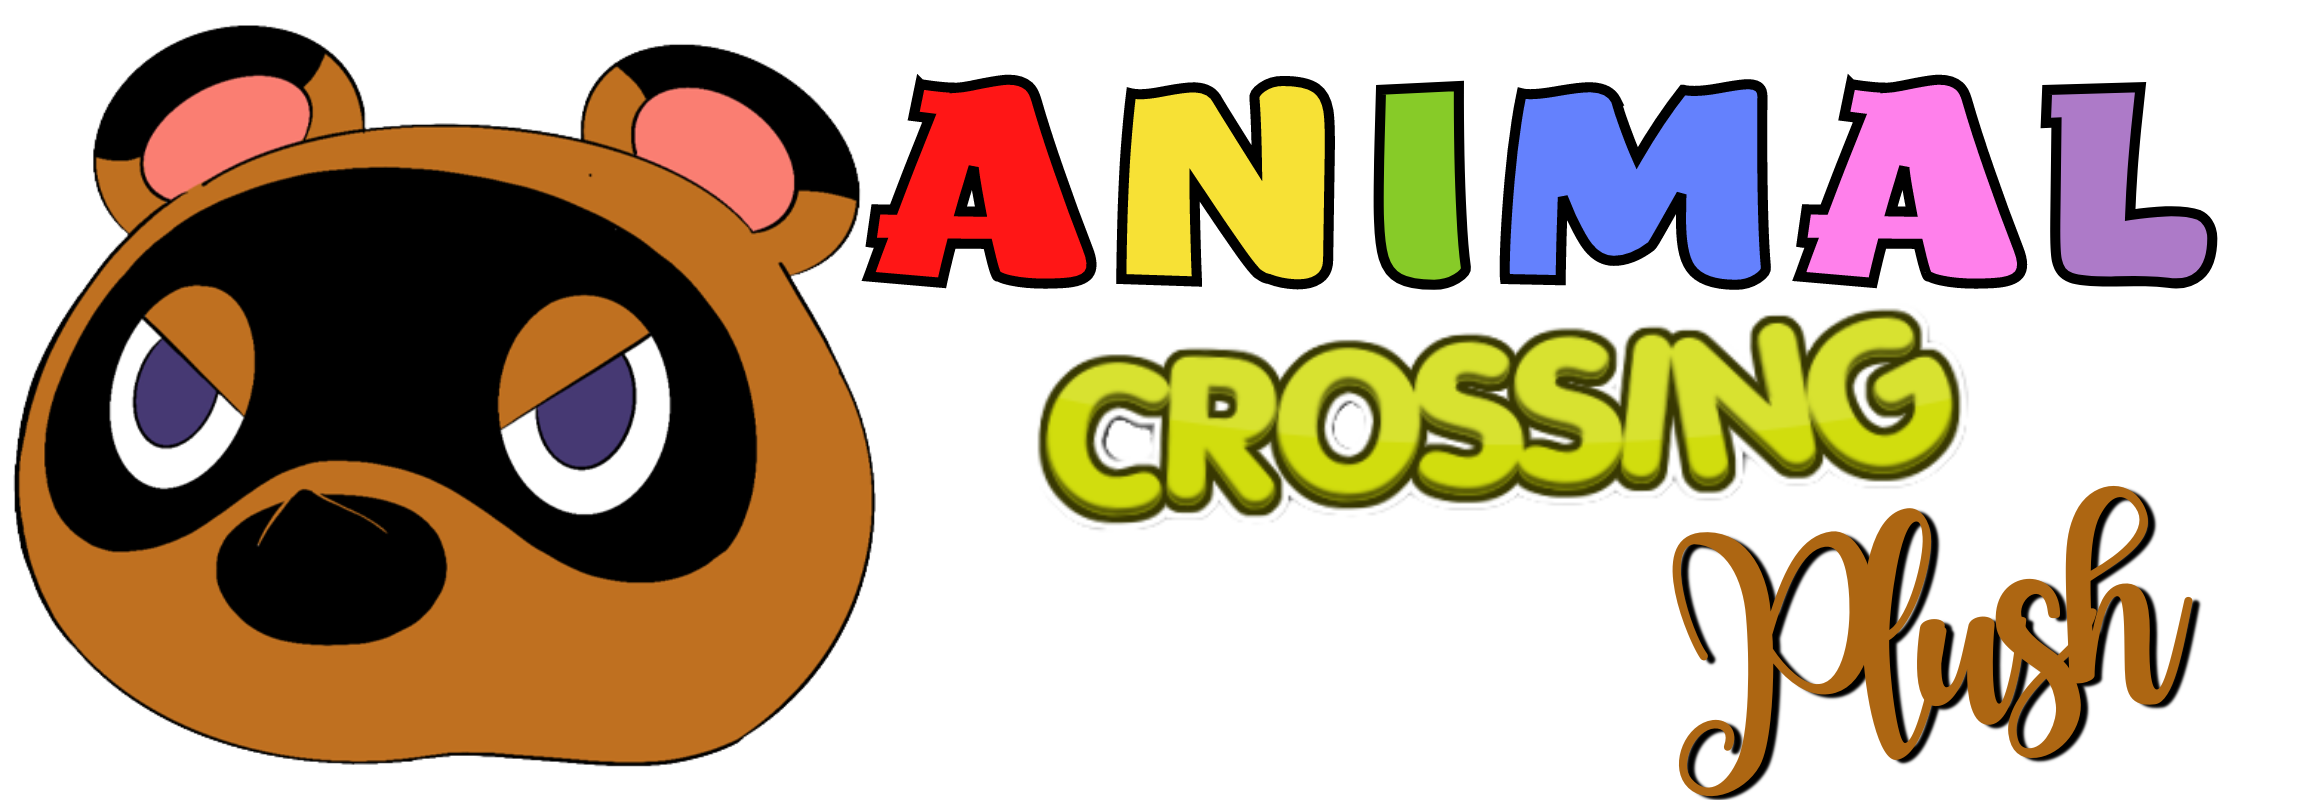 Animal Crossing Plush